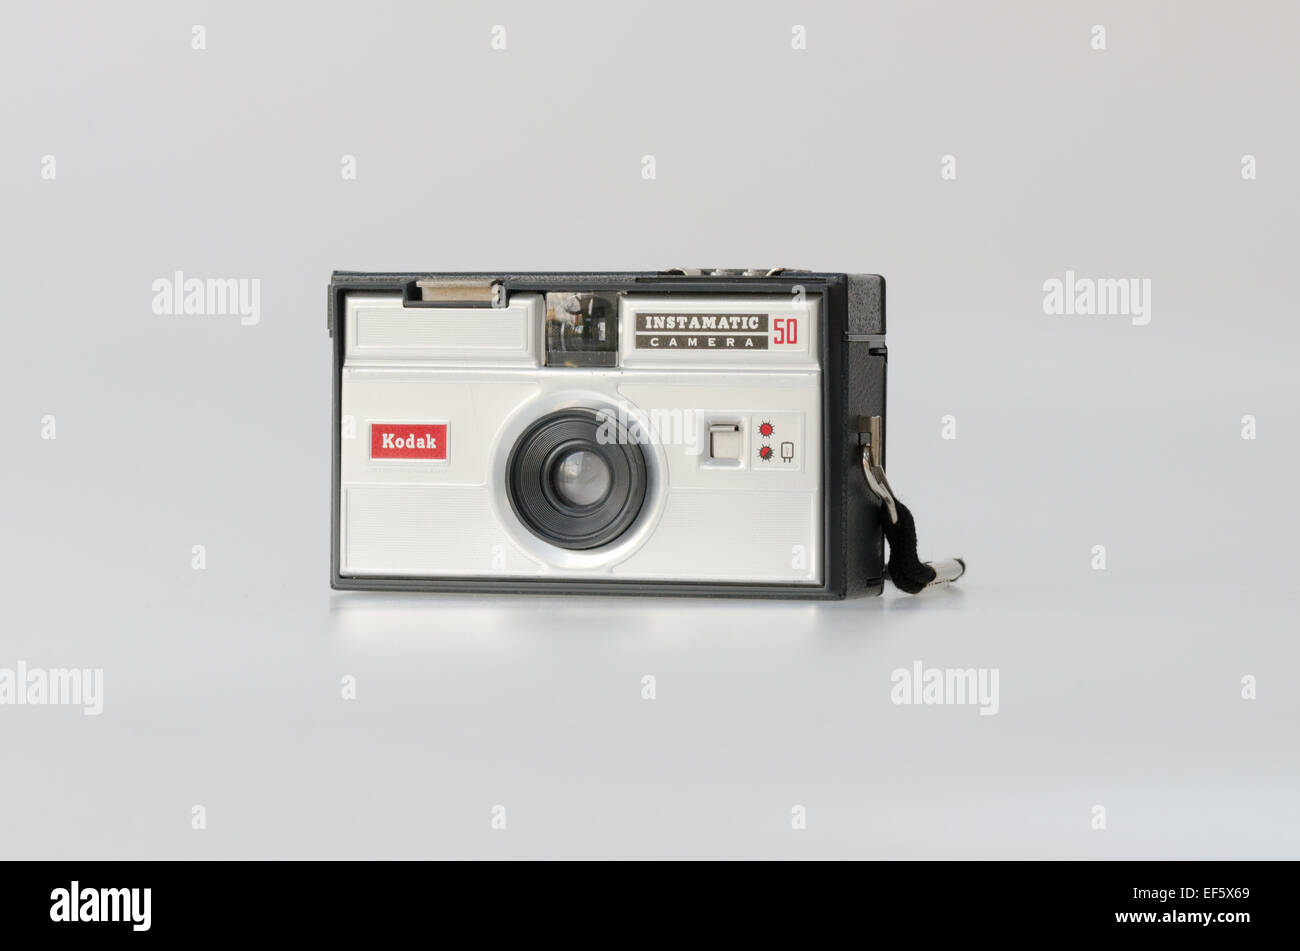 Kodak Instamatic 50 Camera Stock Photo